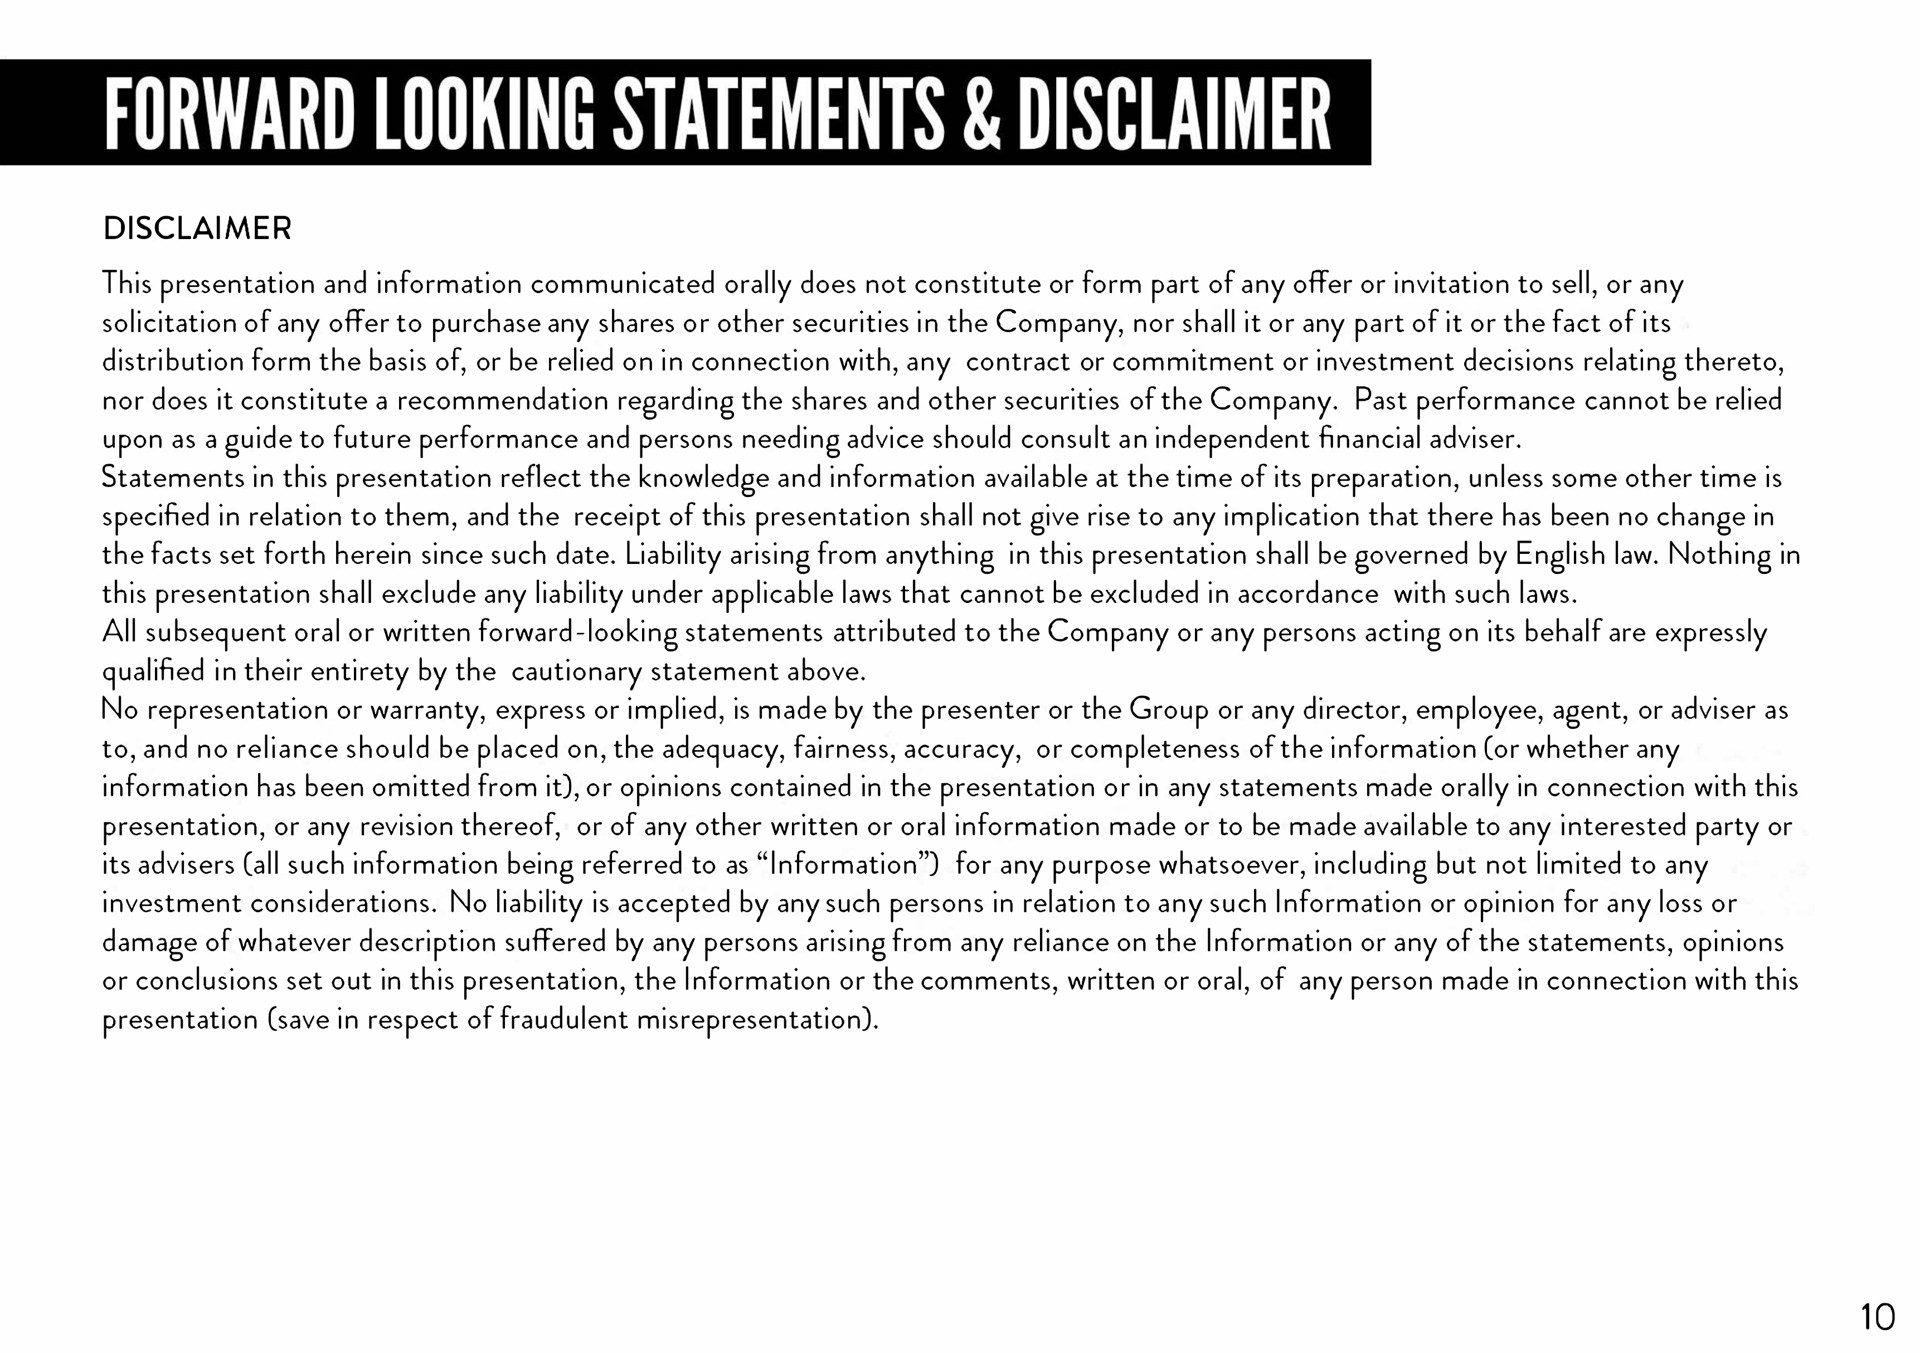 disclaimer forward looking statements | Boohoo Group